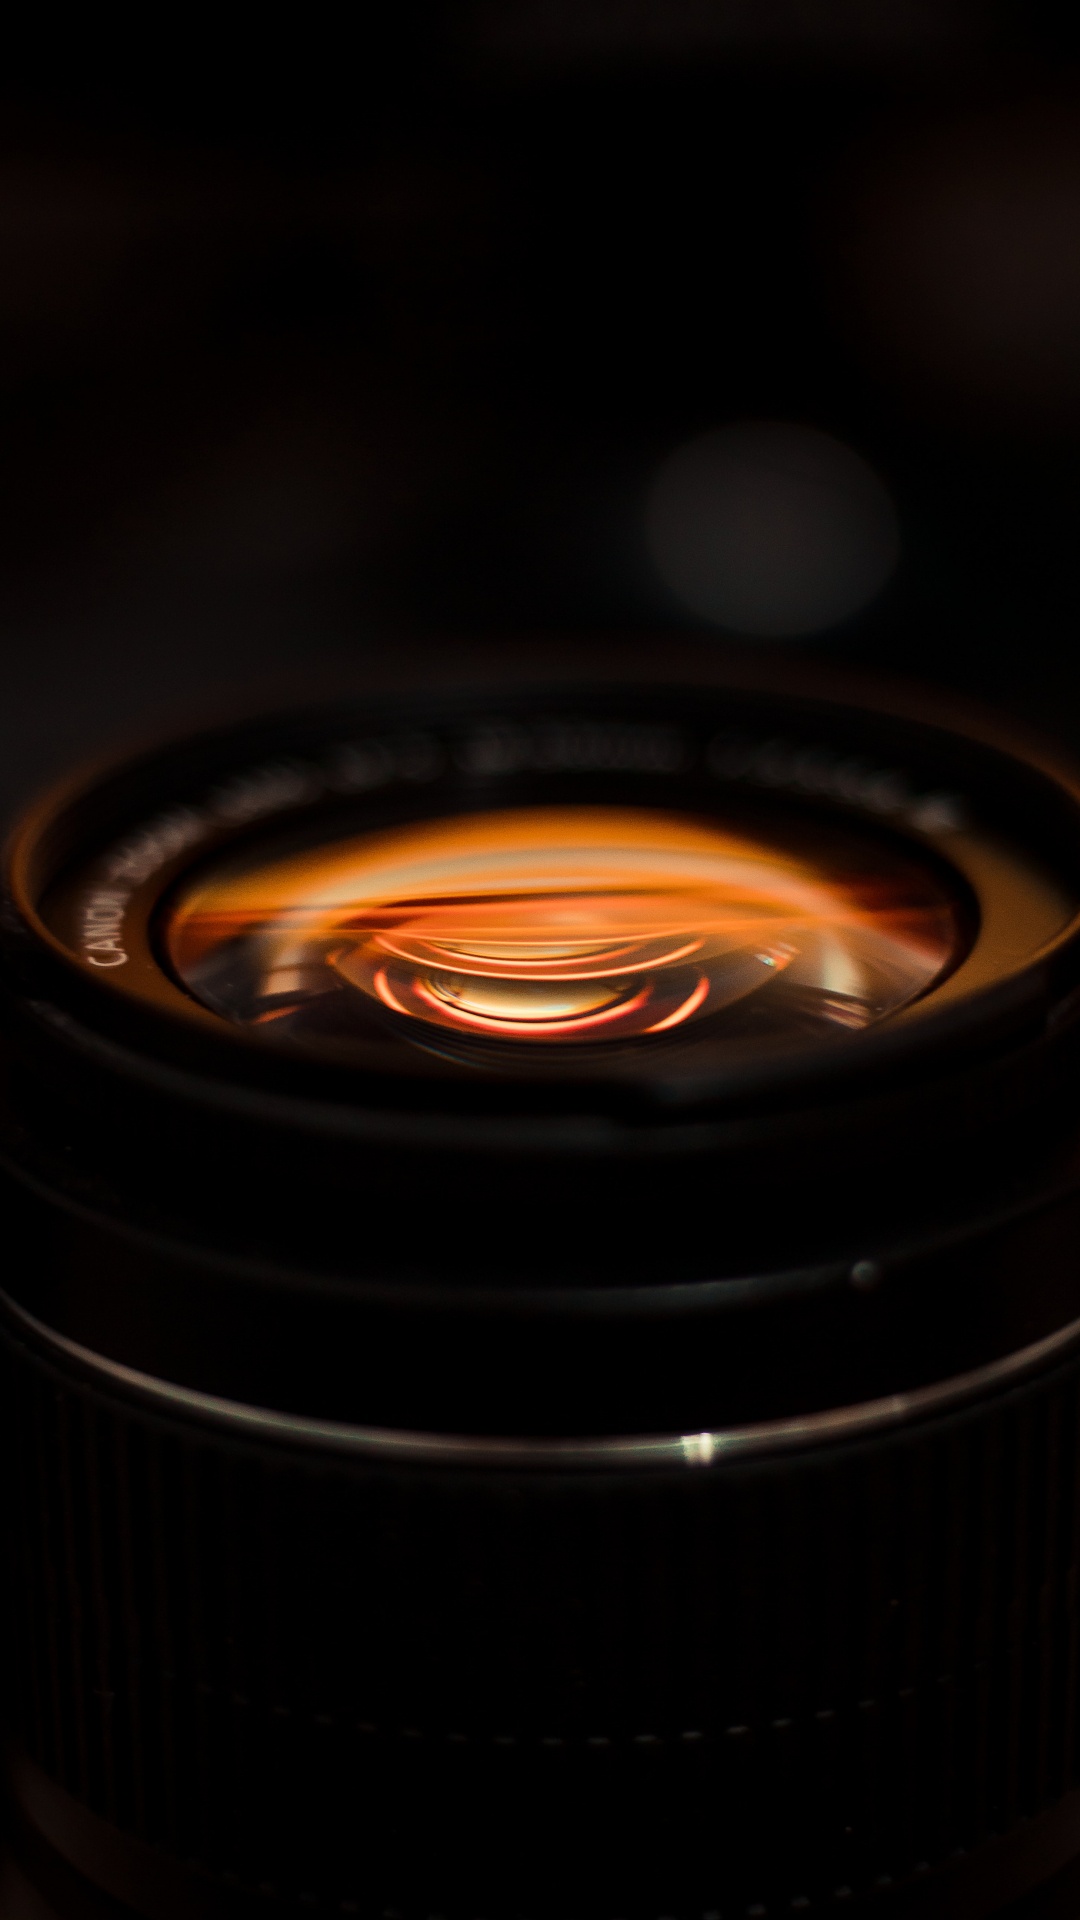 Black Camera Lens With Orange Light. Wallpaper in 1080x1920 Resolution